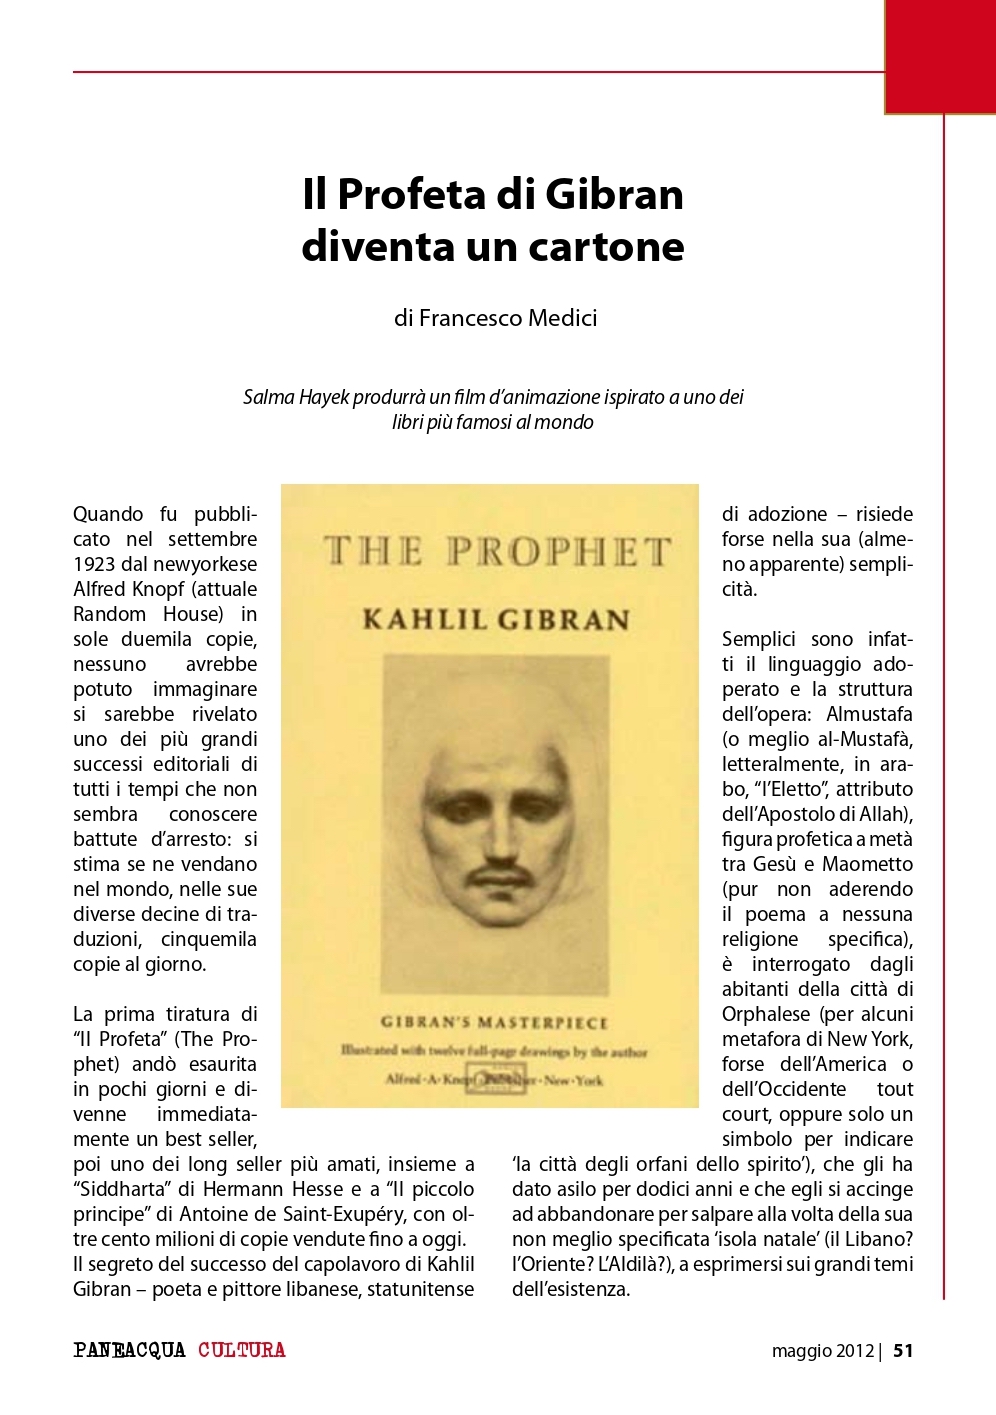 Francesco Medici, "Il Profeta" di Gibran diventa un cartone, «Paneacqua», May 2012